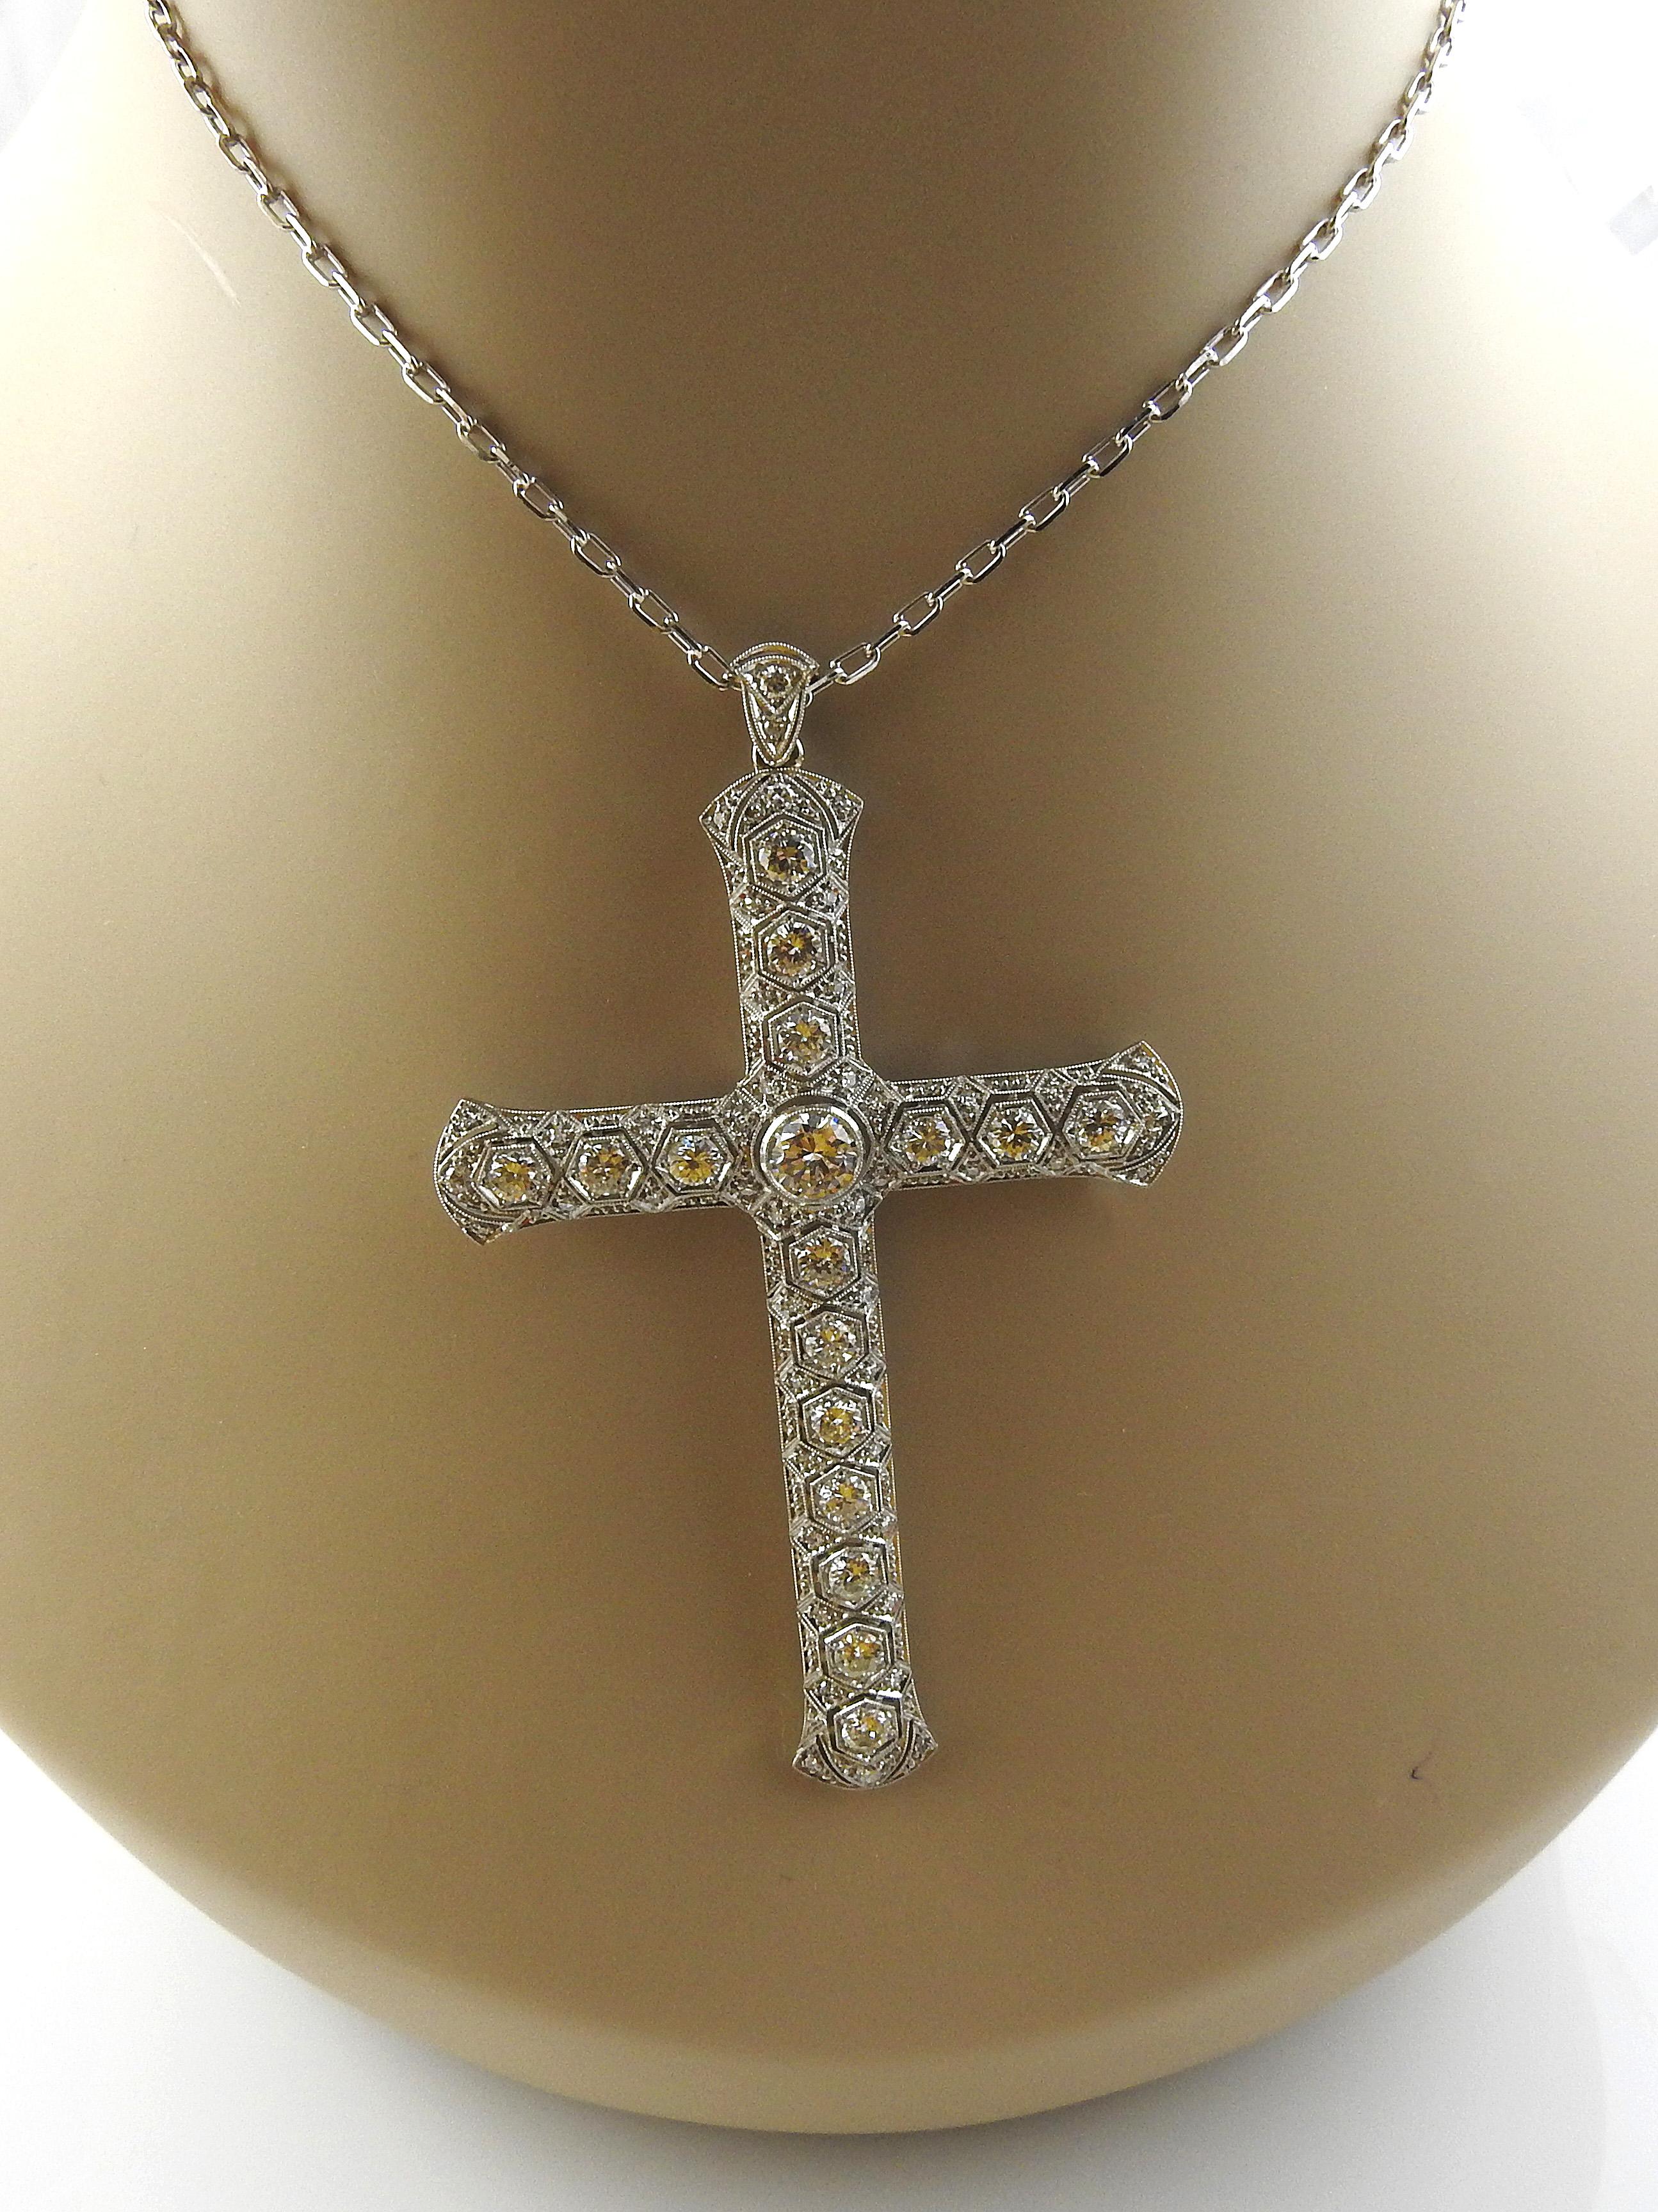  14K White Gold Large Diamond Cross Pendant Necklace 3.51cts 6